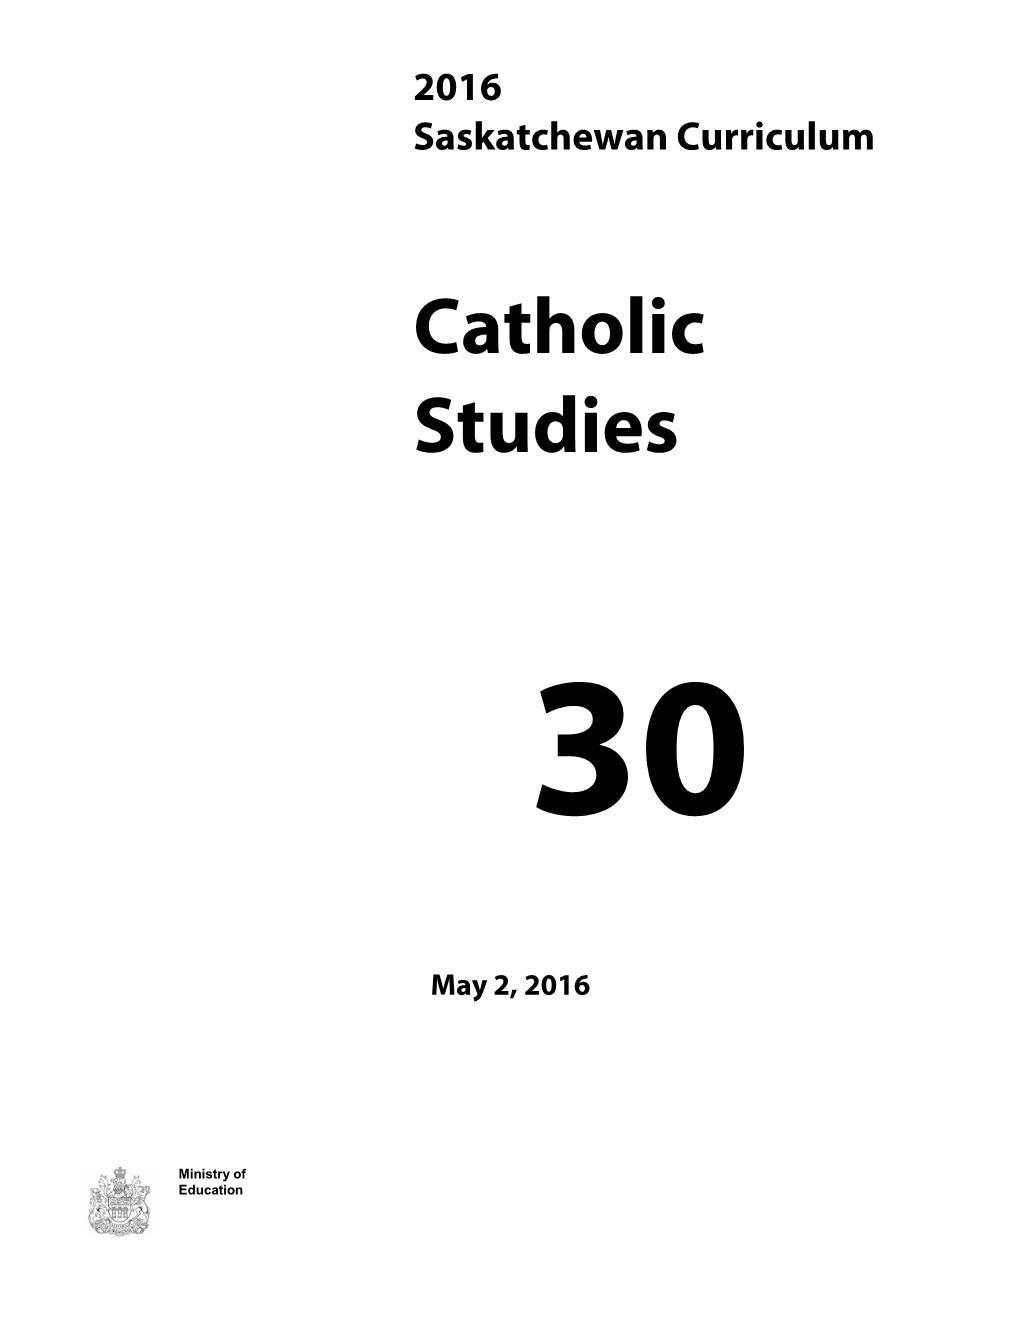 Catholic Studies